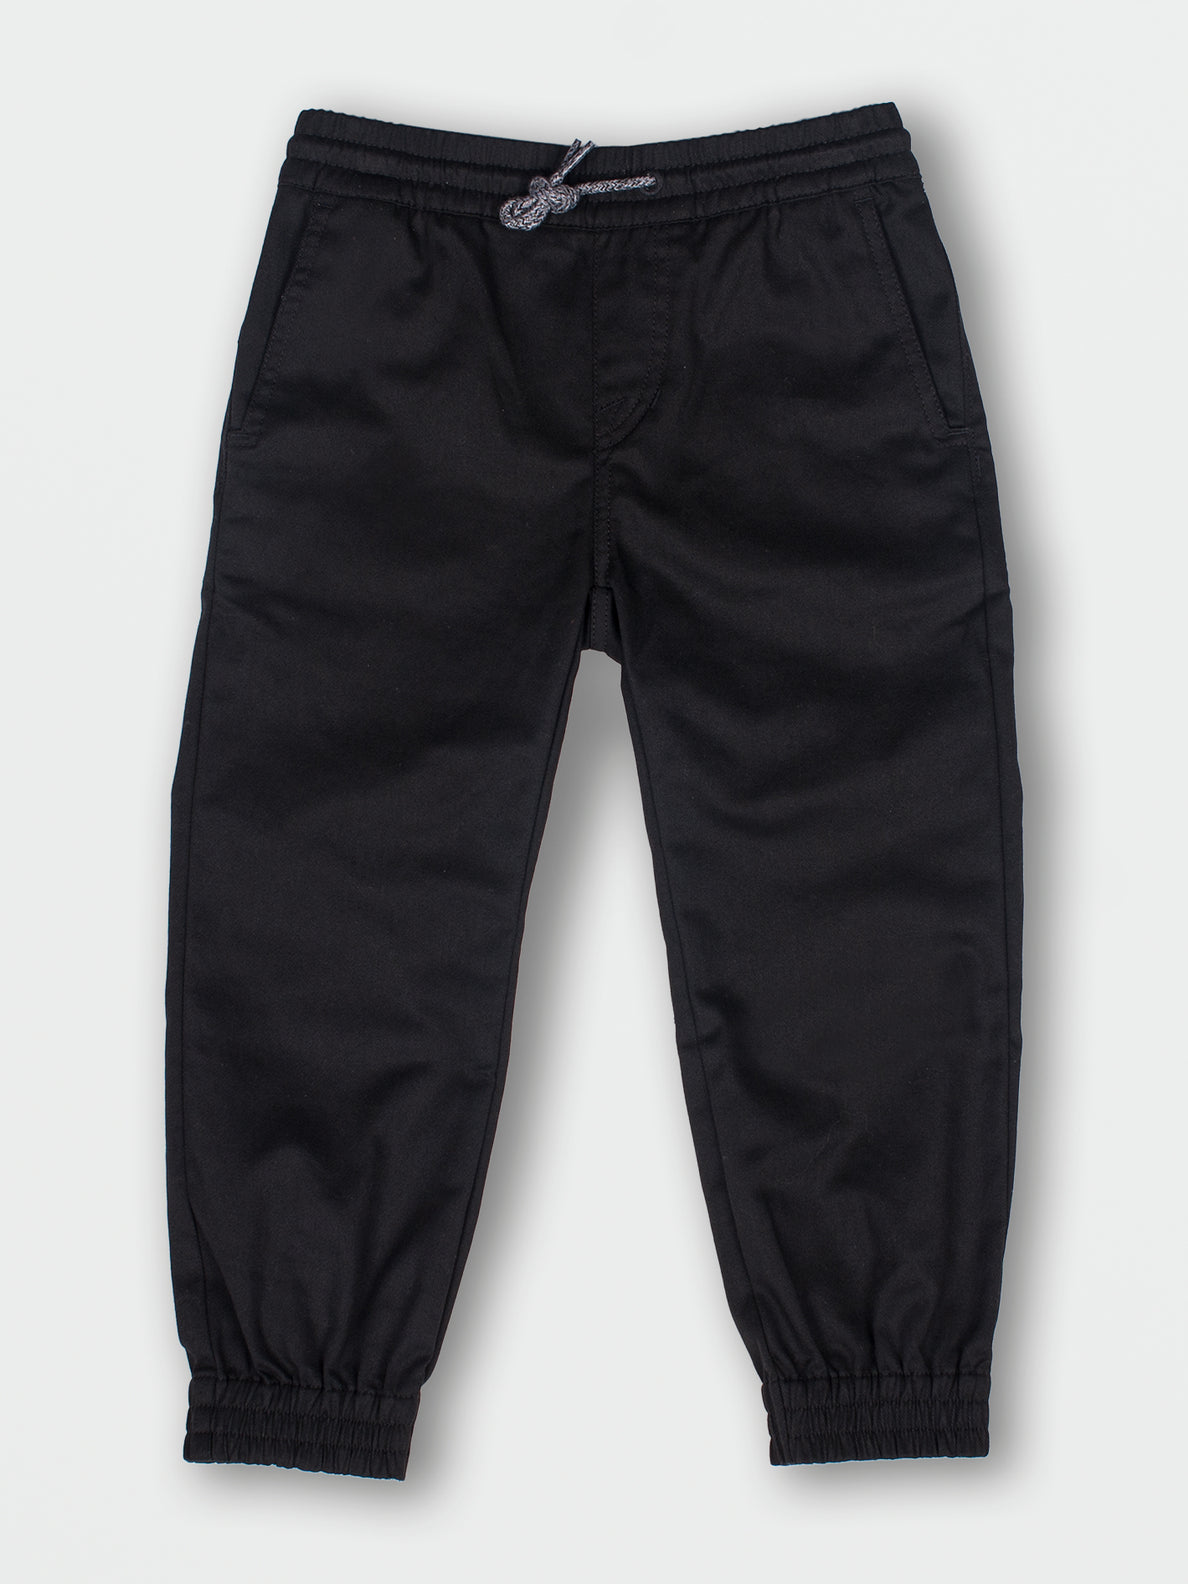 Buy Black Color Bottomwear Sports Wear Boy's Black Solid Activewear Joggers  Clothing for Boy Jollee